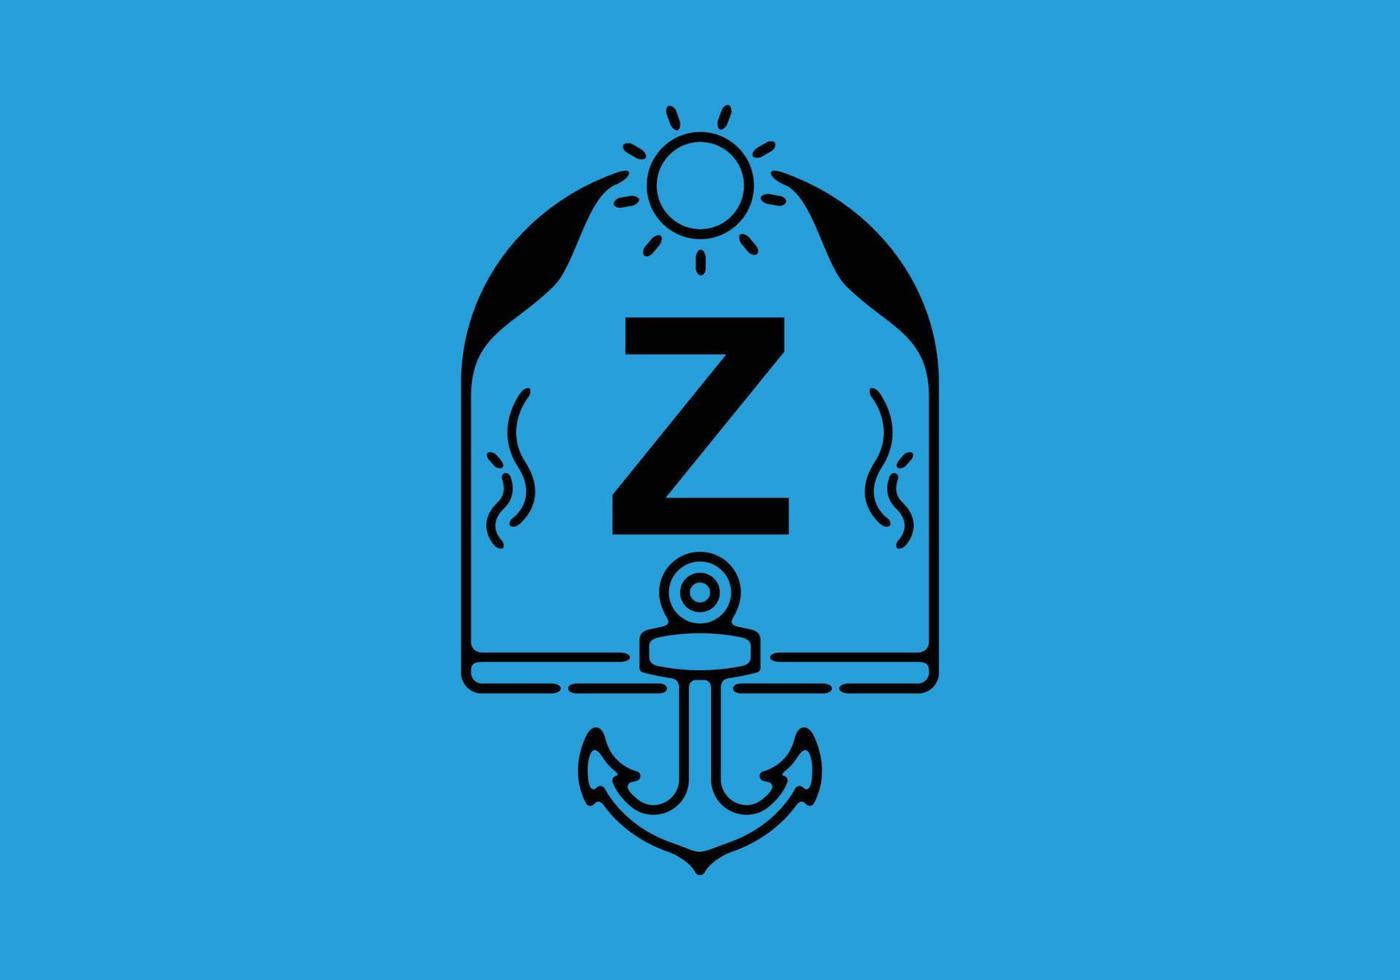 Black line art illustration of Z initial letter in anchor frame vector